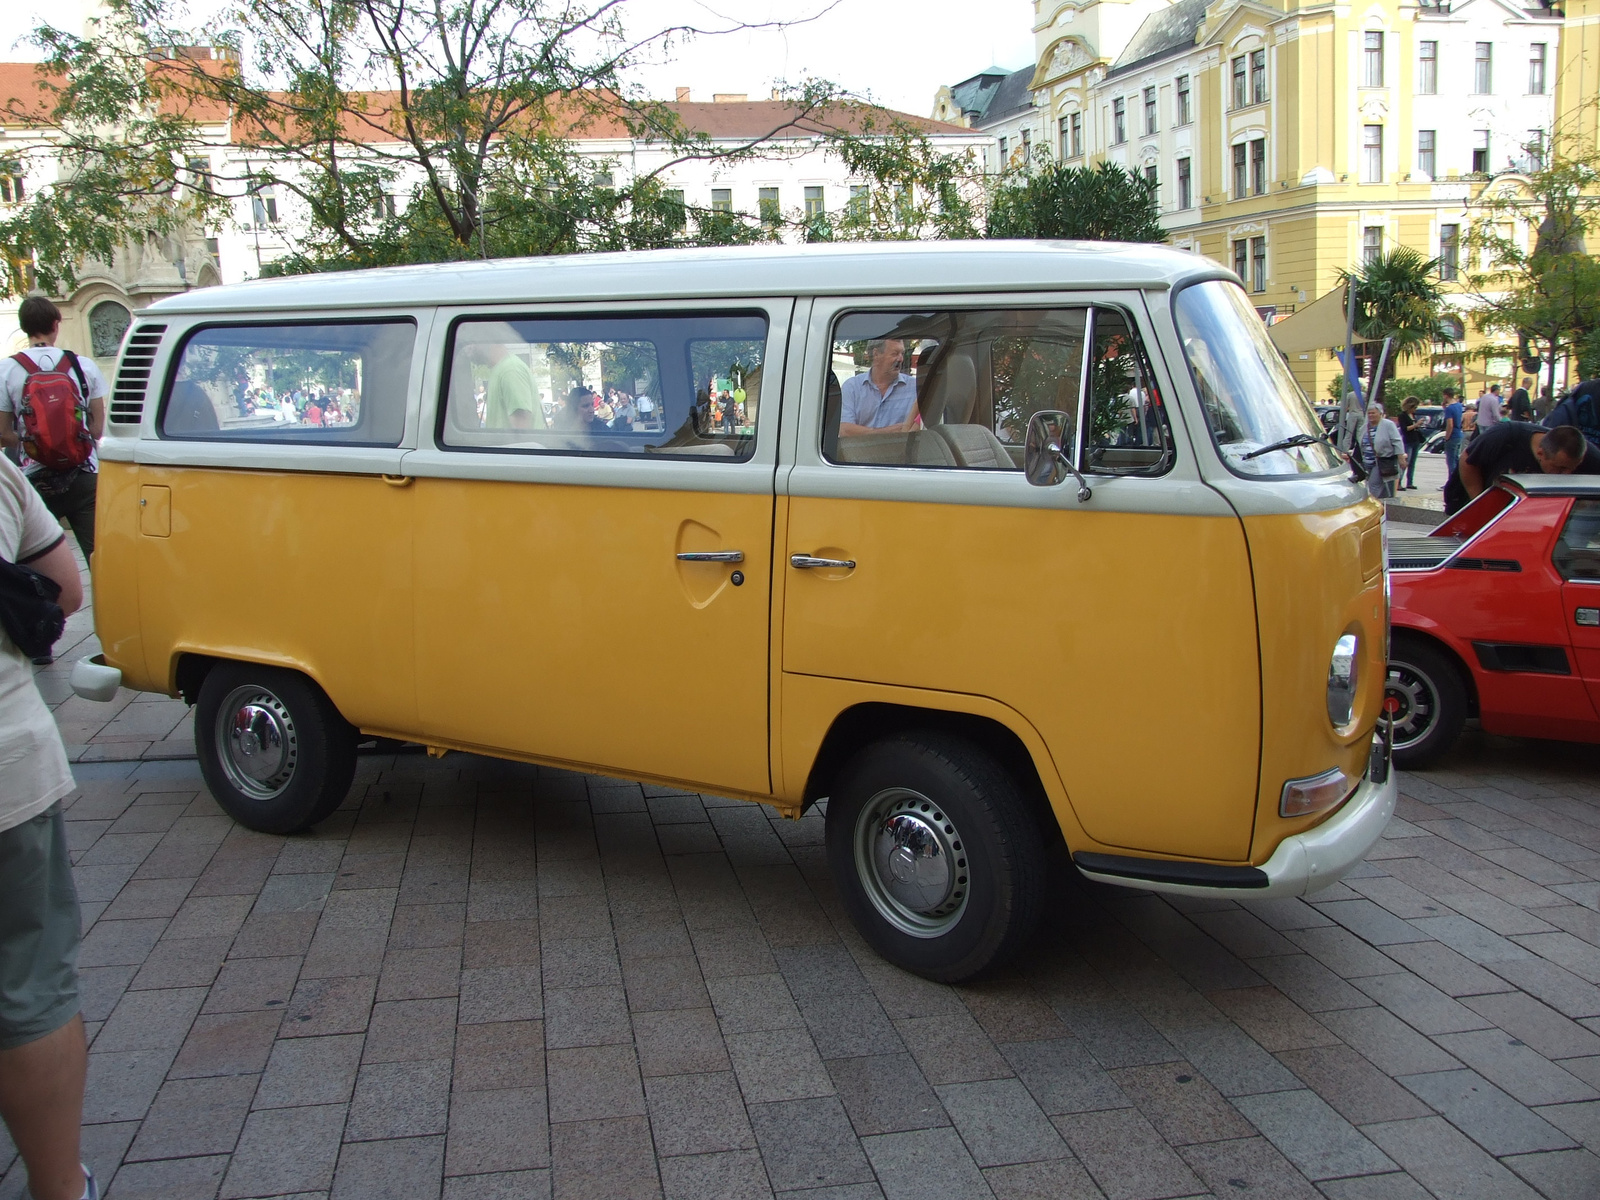 VW Transporter T2